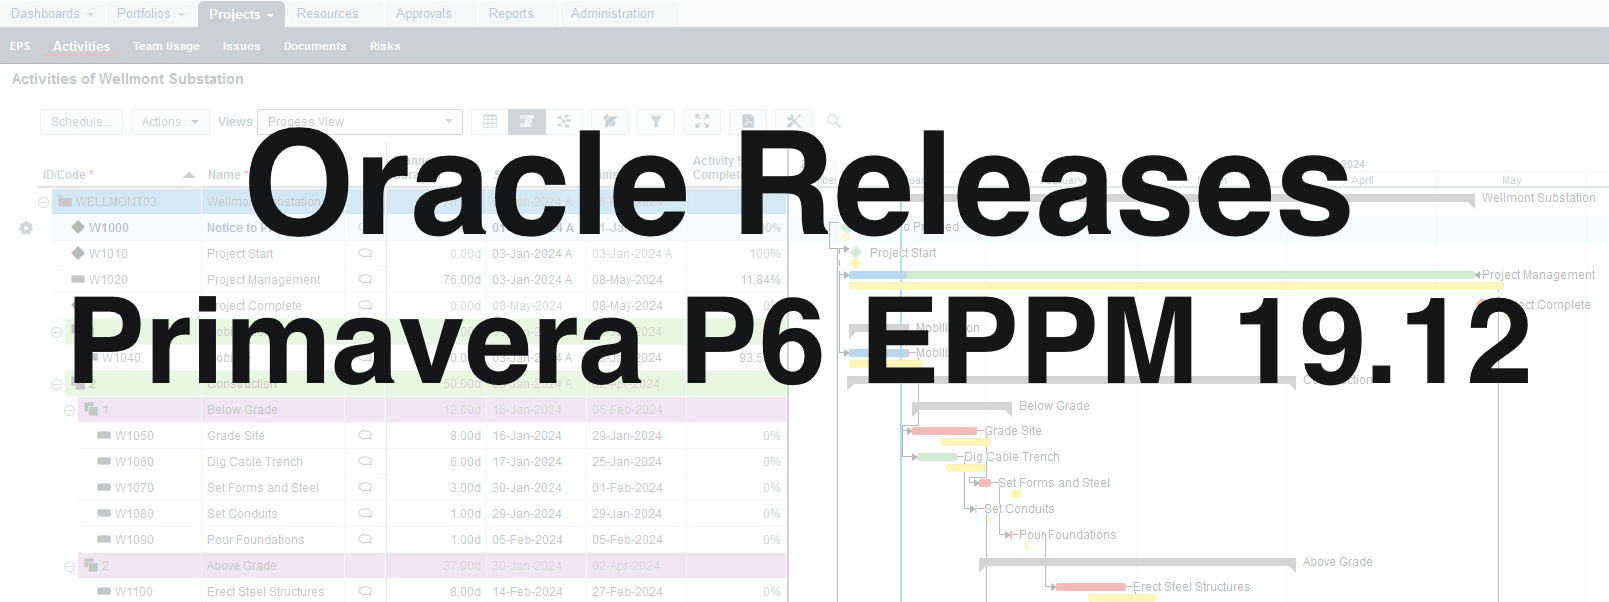 Oracle Releases Primavera P6 EPPM 19.12